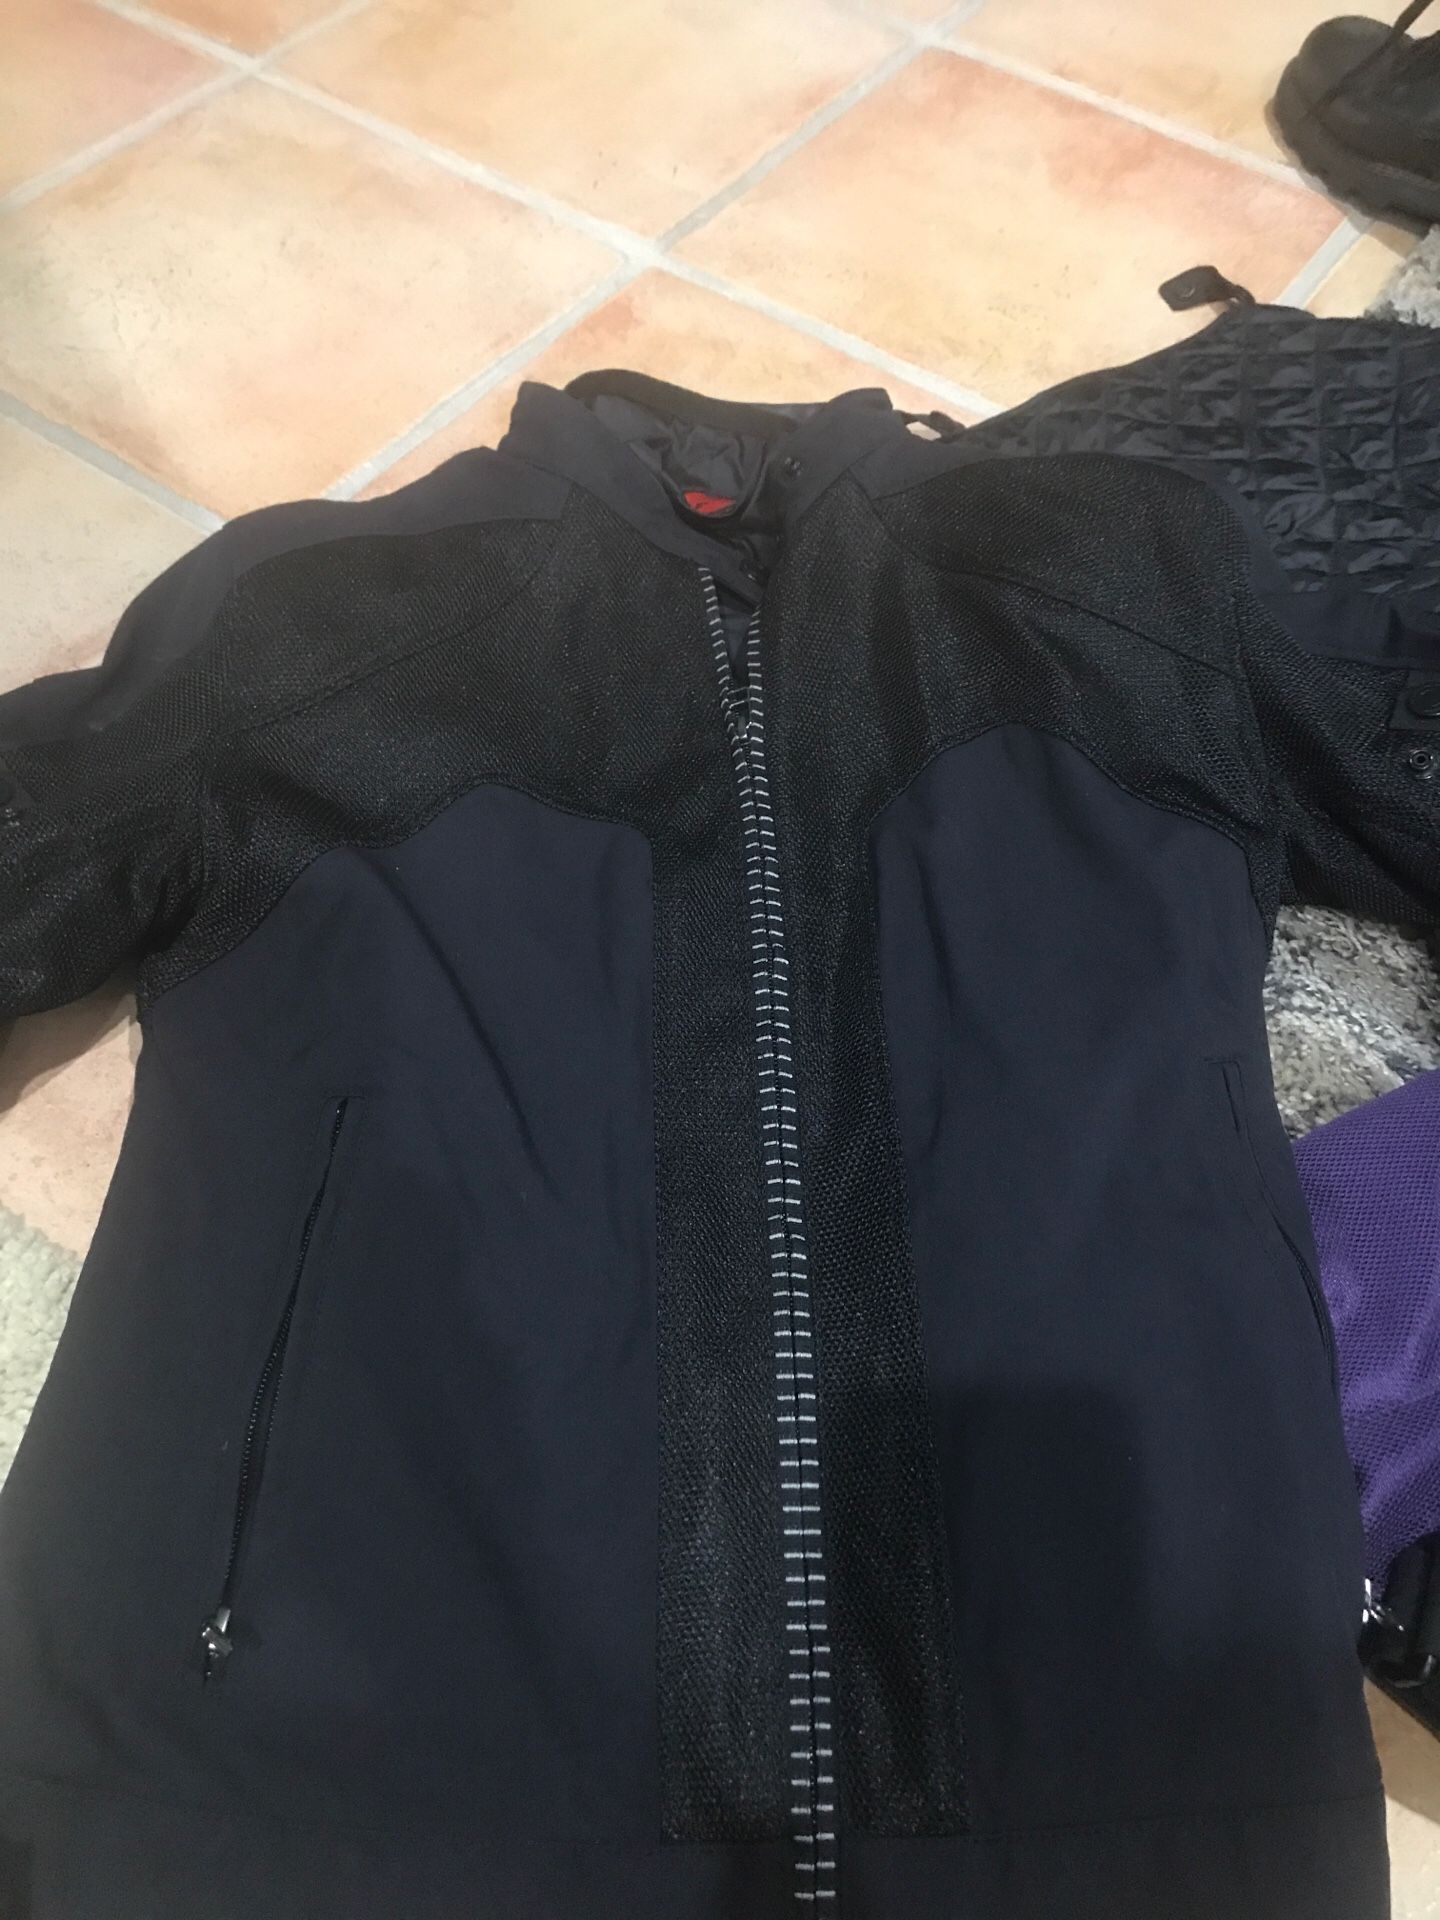 Women’s Dainese riding jacket brand new